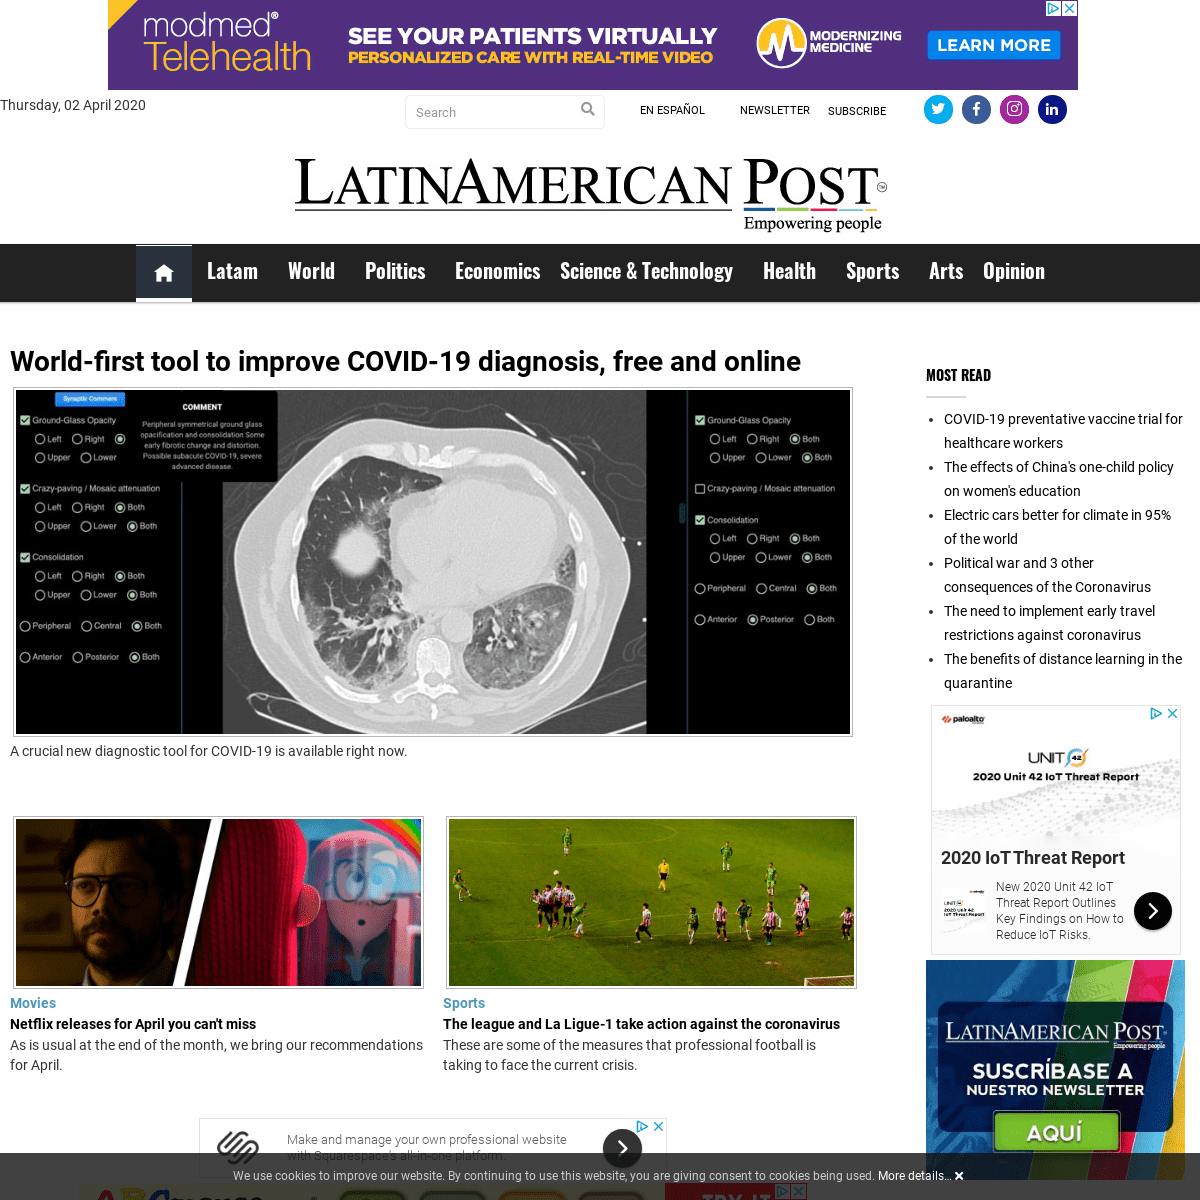 A complete backup of latinamericanpost.com